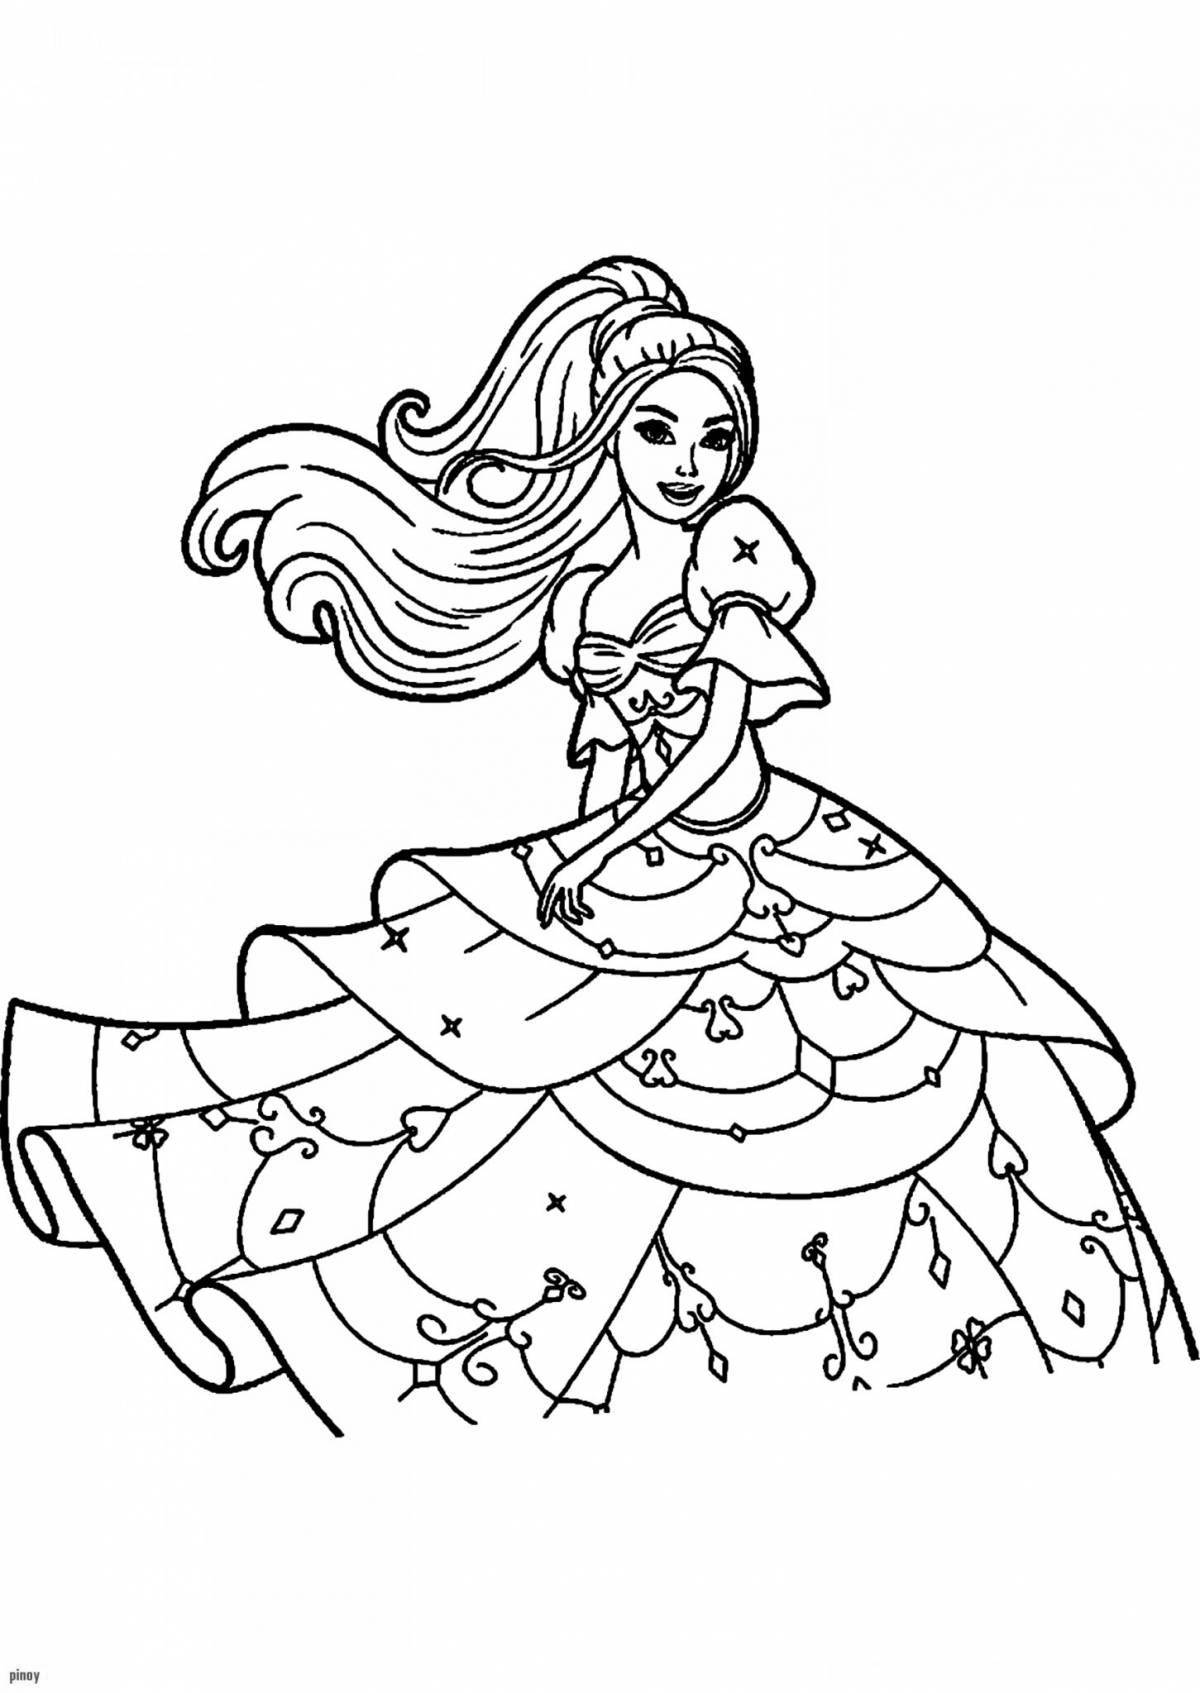 Violent coloring for girls princesses in beautiful dresses